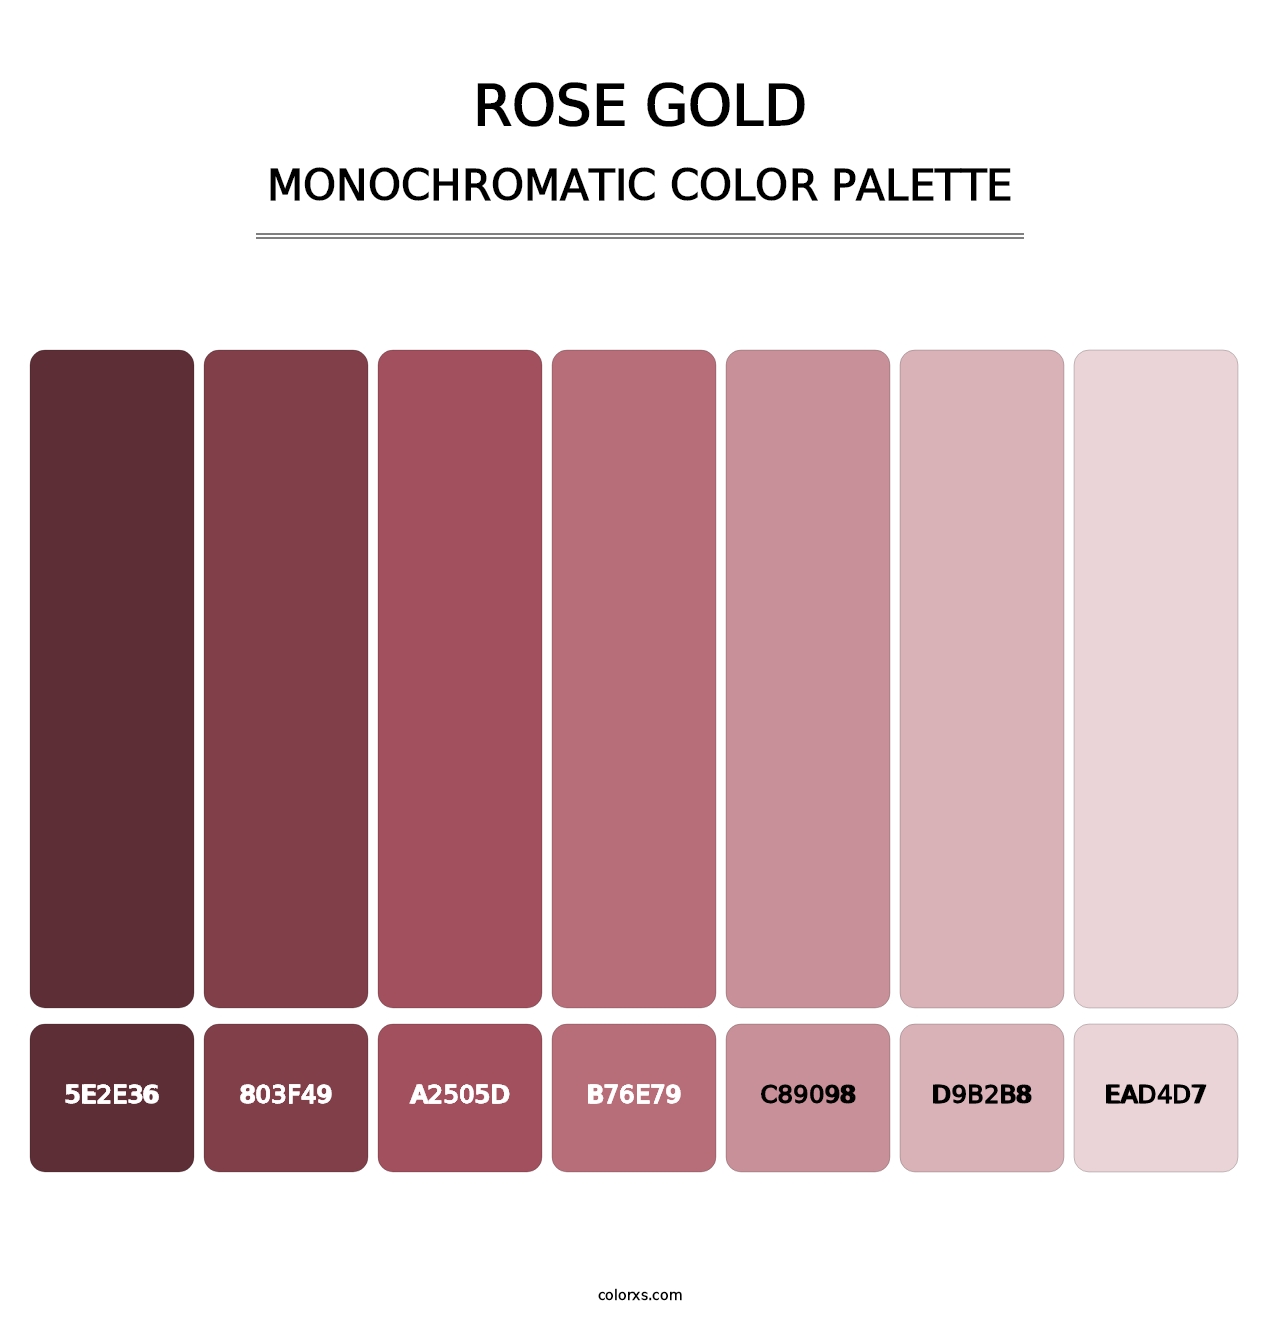 Rose Gold - Monochromatic Color Palette